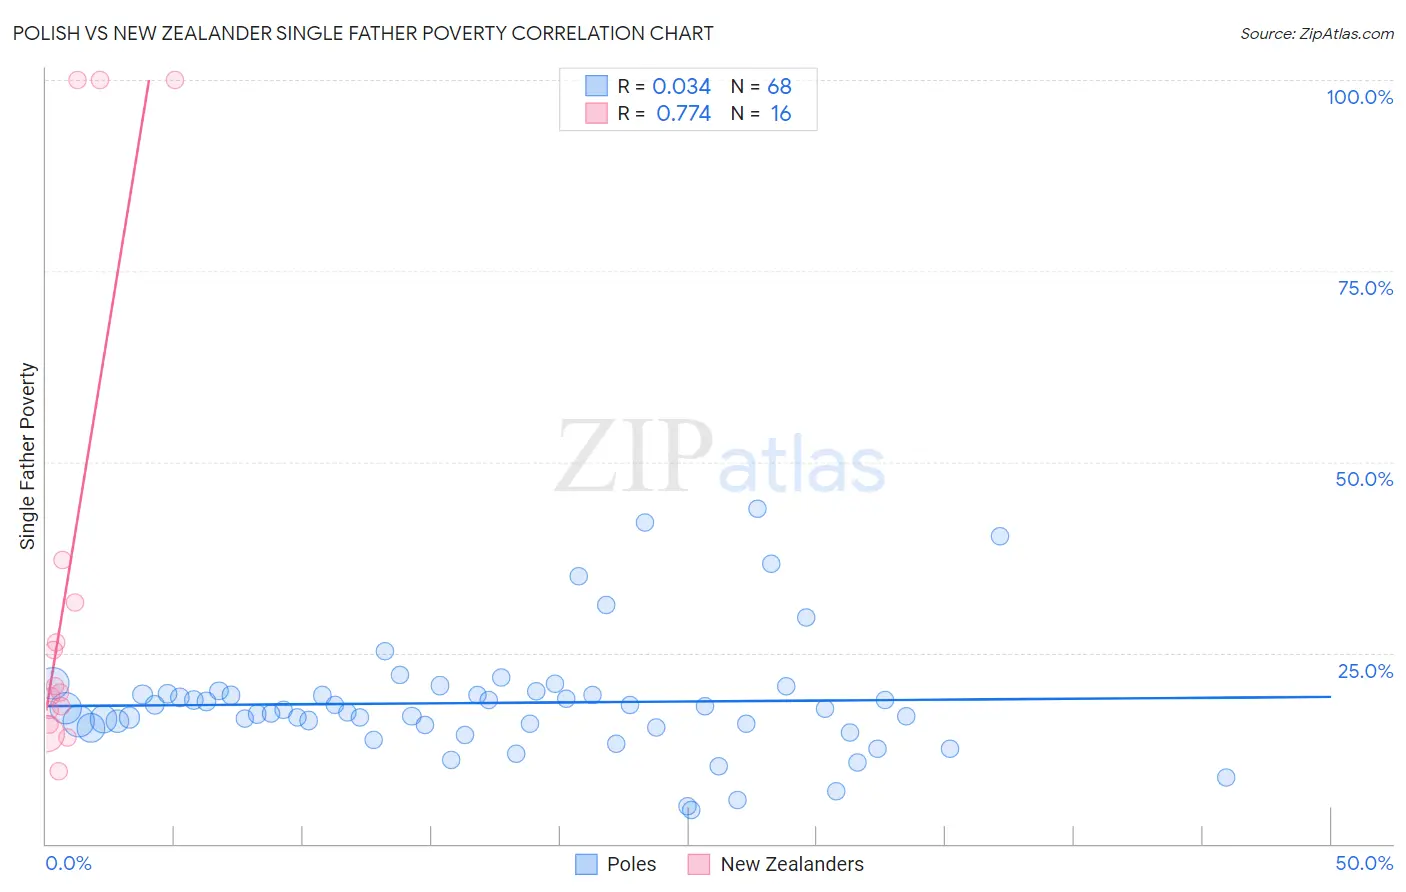 Polish vs New Zealander Single Father Poverty